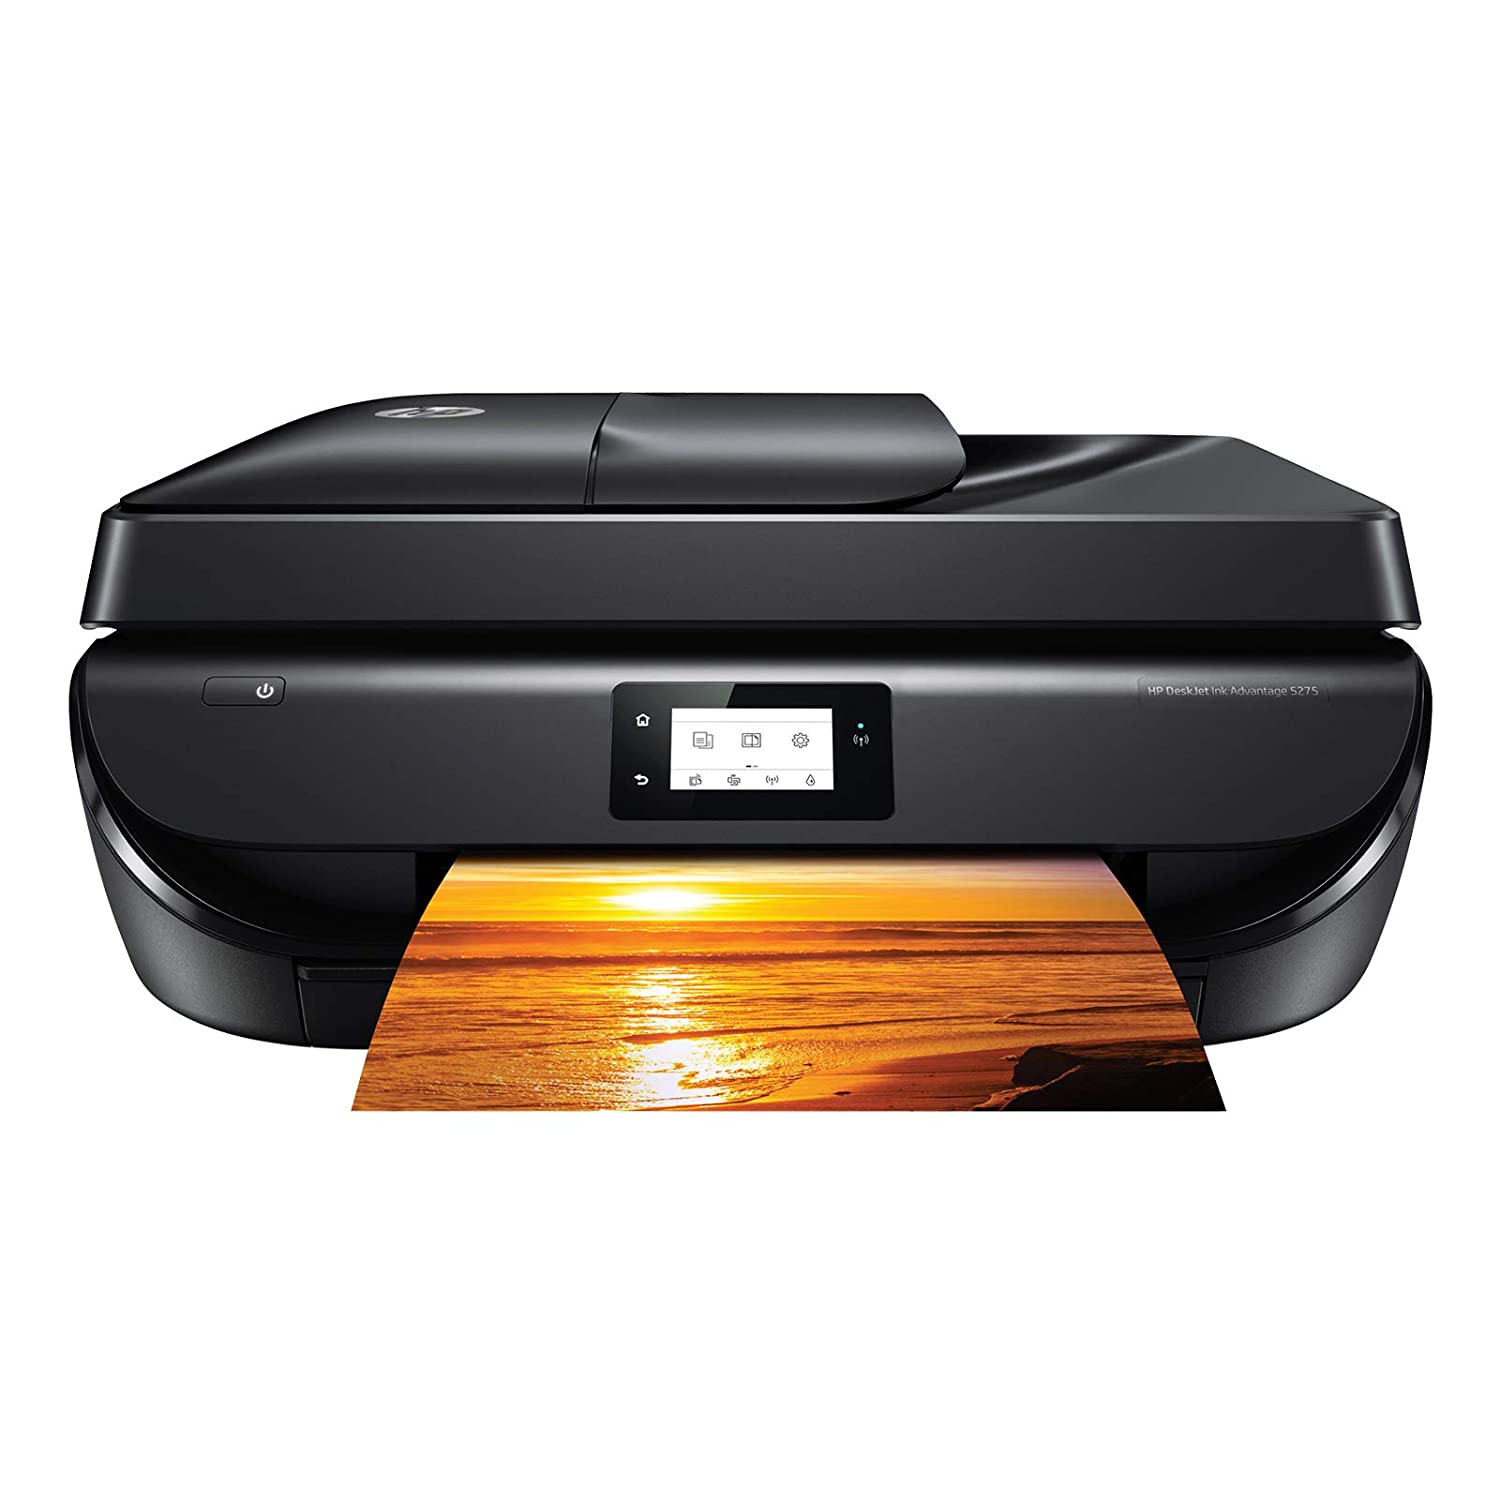 Unboxed HP DeskJet 5275 All-In-One Ink Advantage WiFi Printer (FAX/ADF ... - Printer Point UnboxeD HP DeskJet 5275 All In One Ink ADvantage WiFi Printer